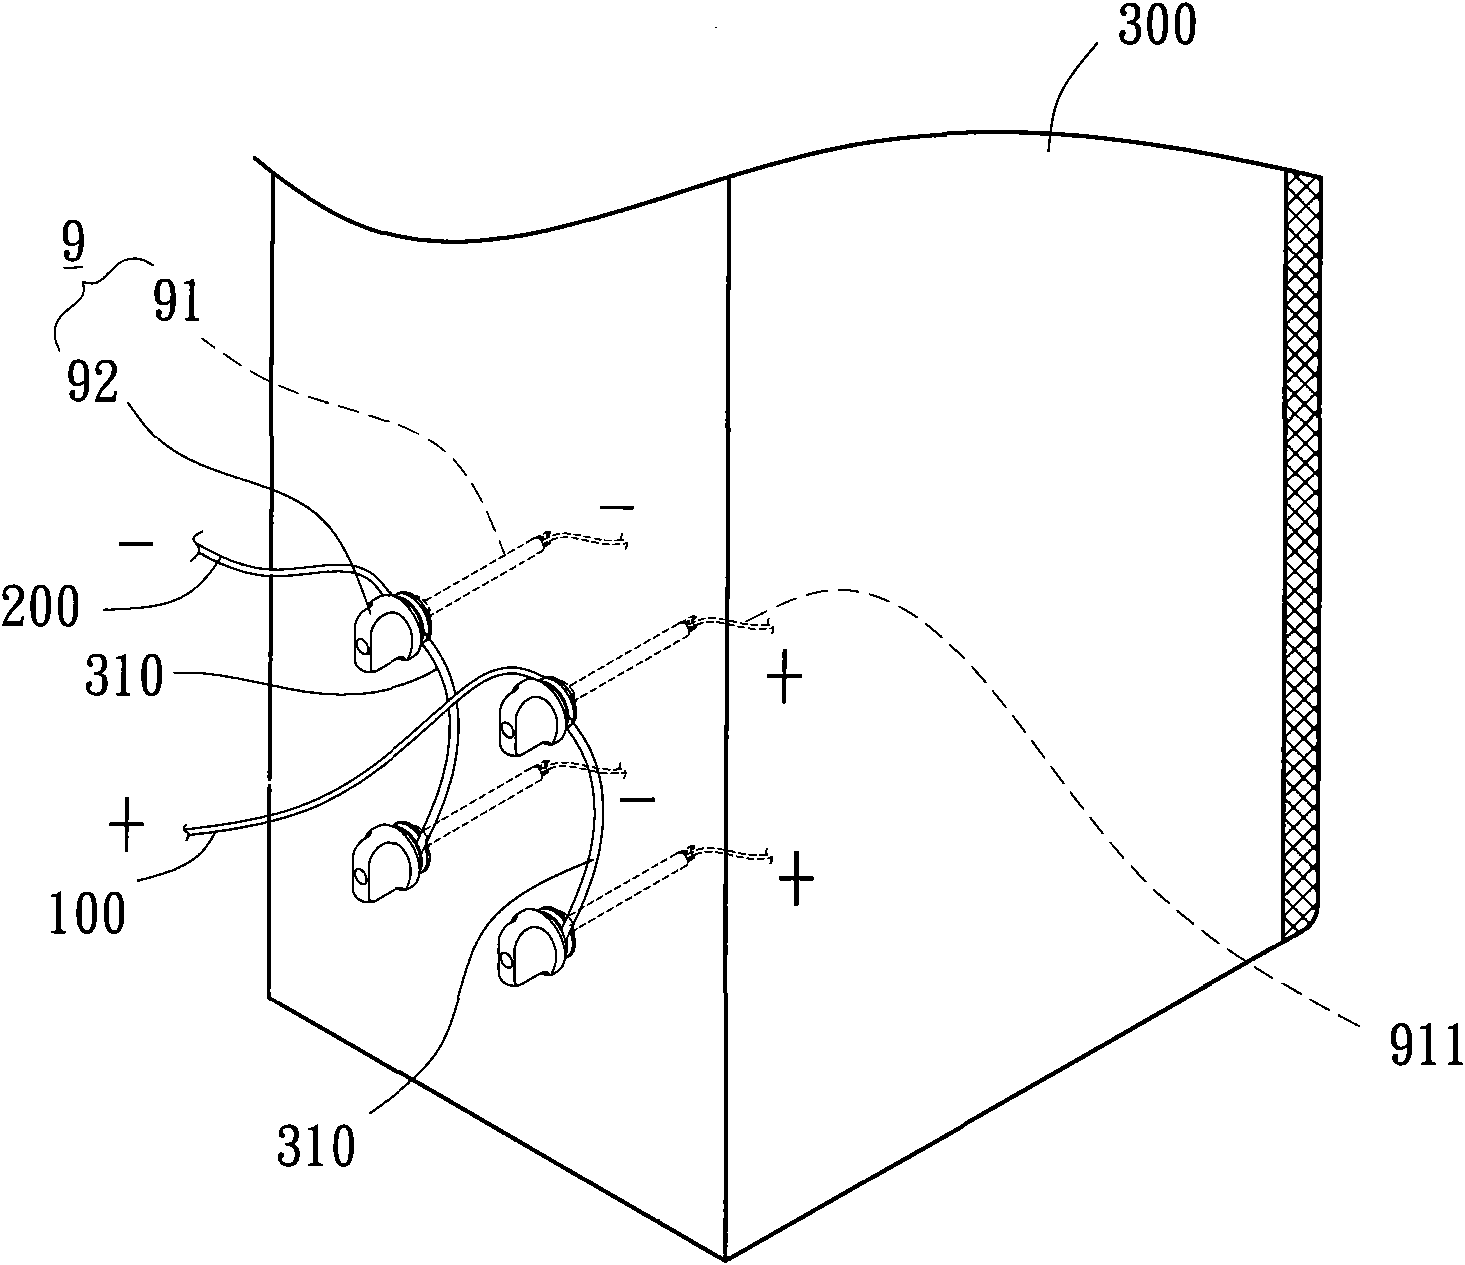 Connecting seat of loudspeaker